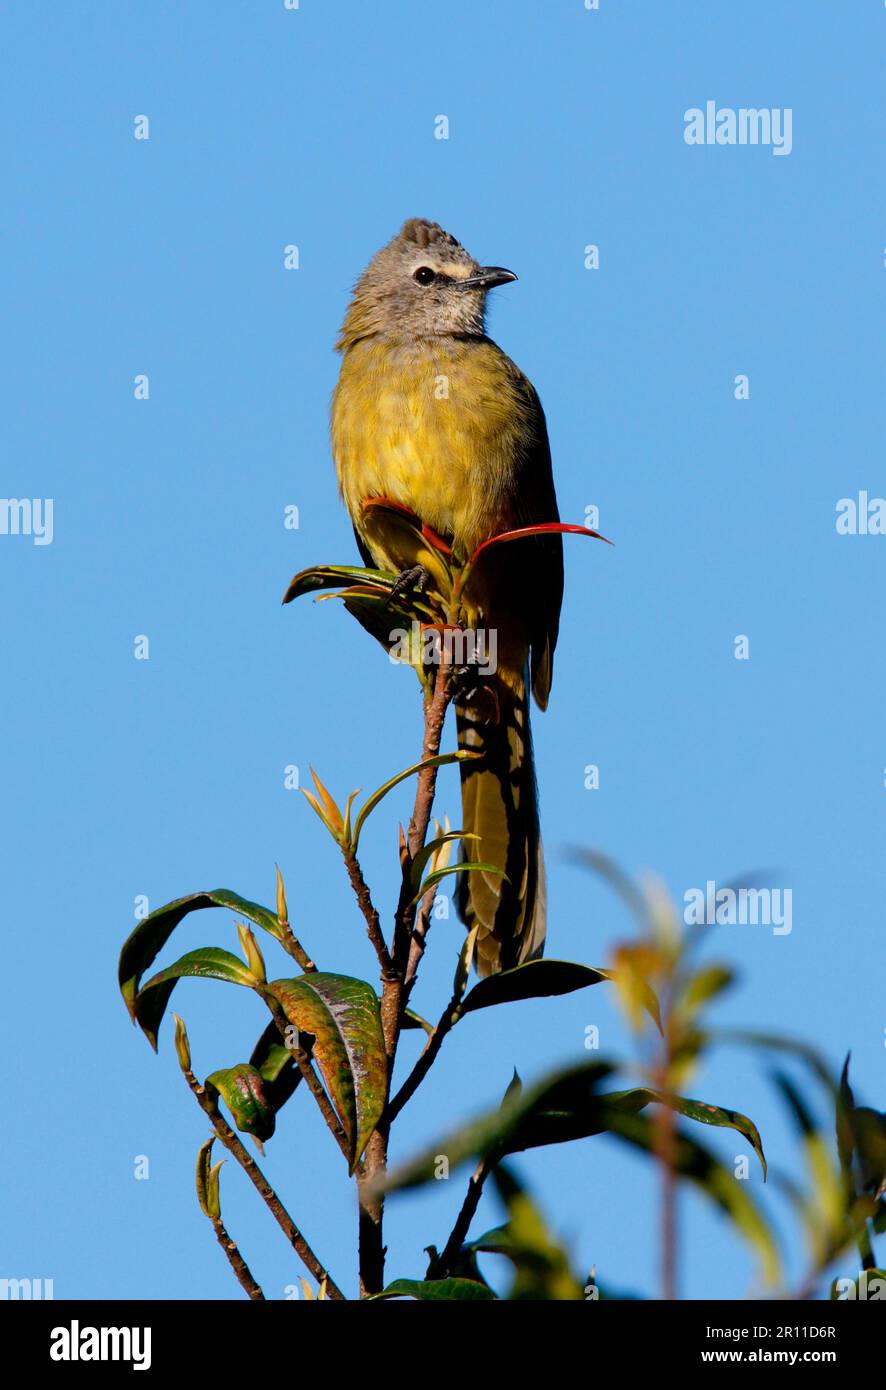 Yellow-cheeked Bulbul, Yellow-cheeked Bulbul, Yellow-cheeked Bulbuls, Songbirds, Animals, Birds, Flavescent Bulbul (Pycnonotus flavescens vividus) Stock Photo